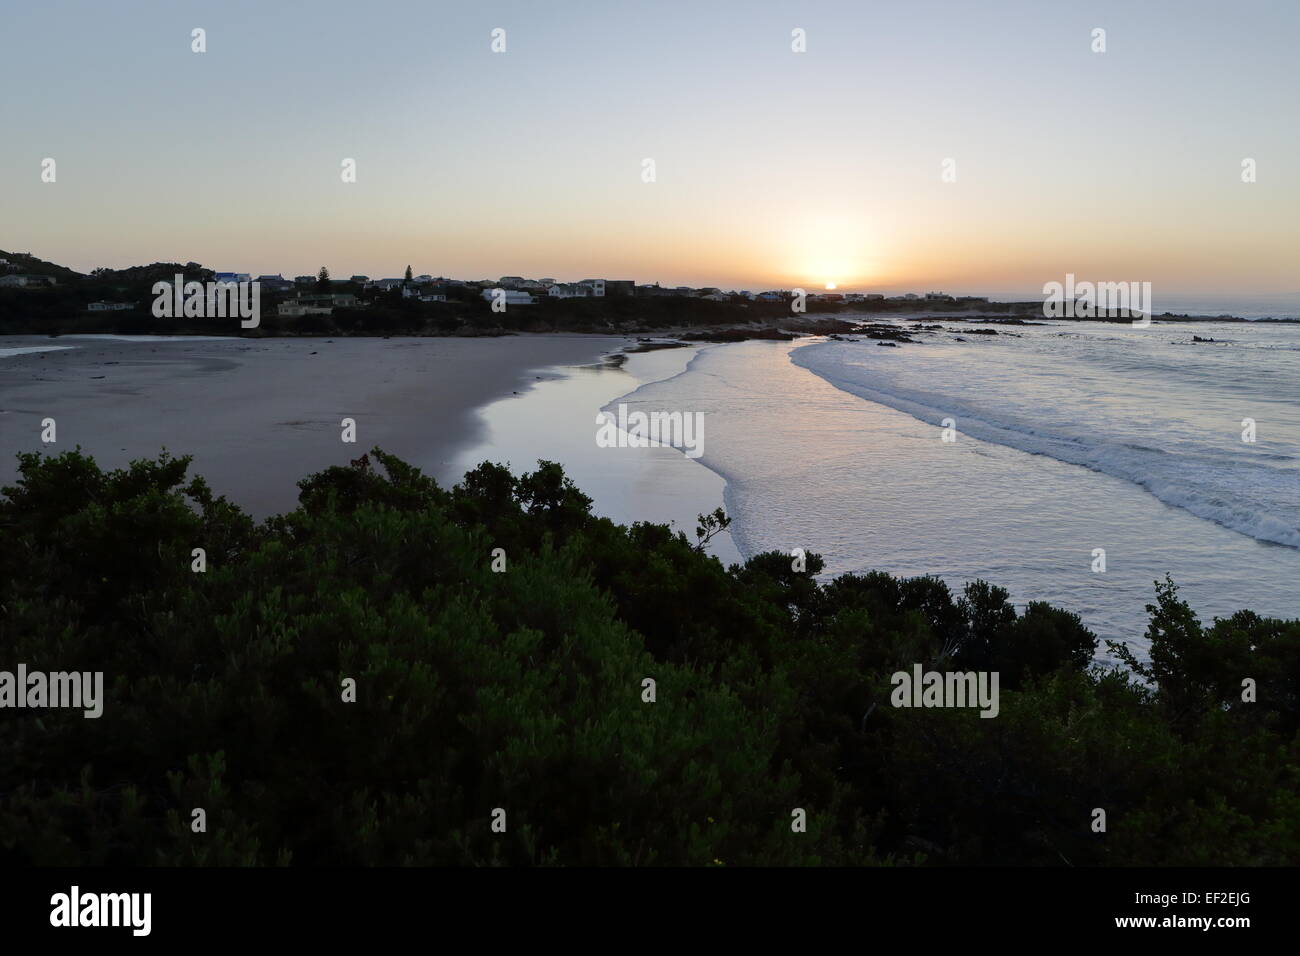 Rooi Els lagoon at sunset Stock Photo